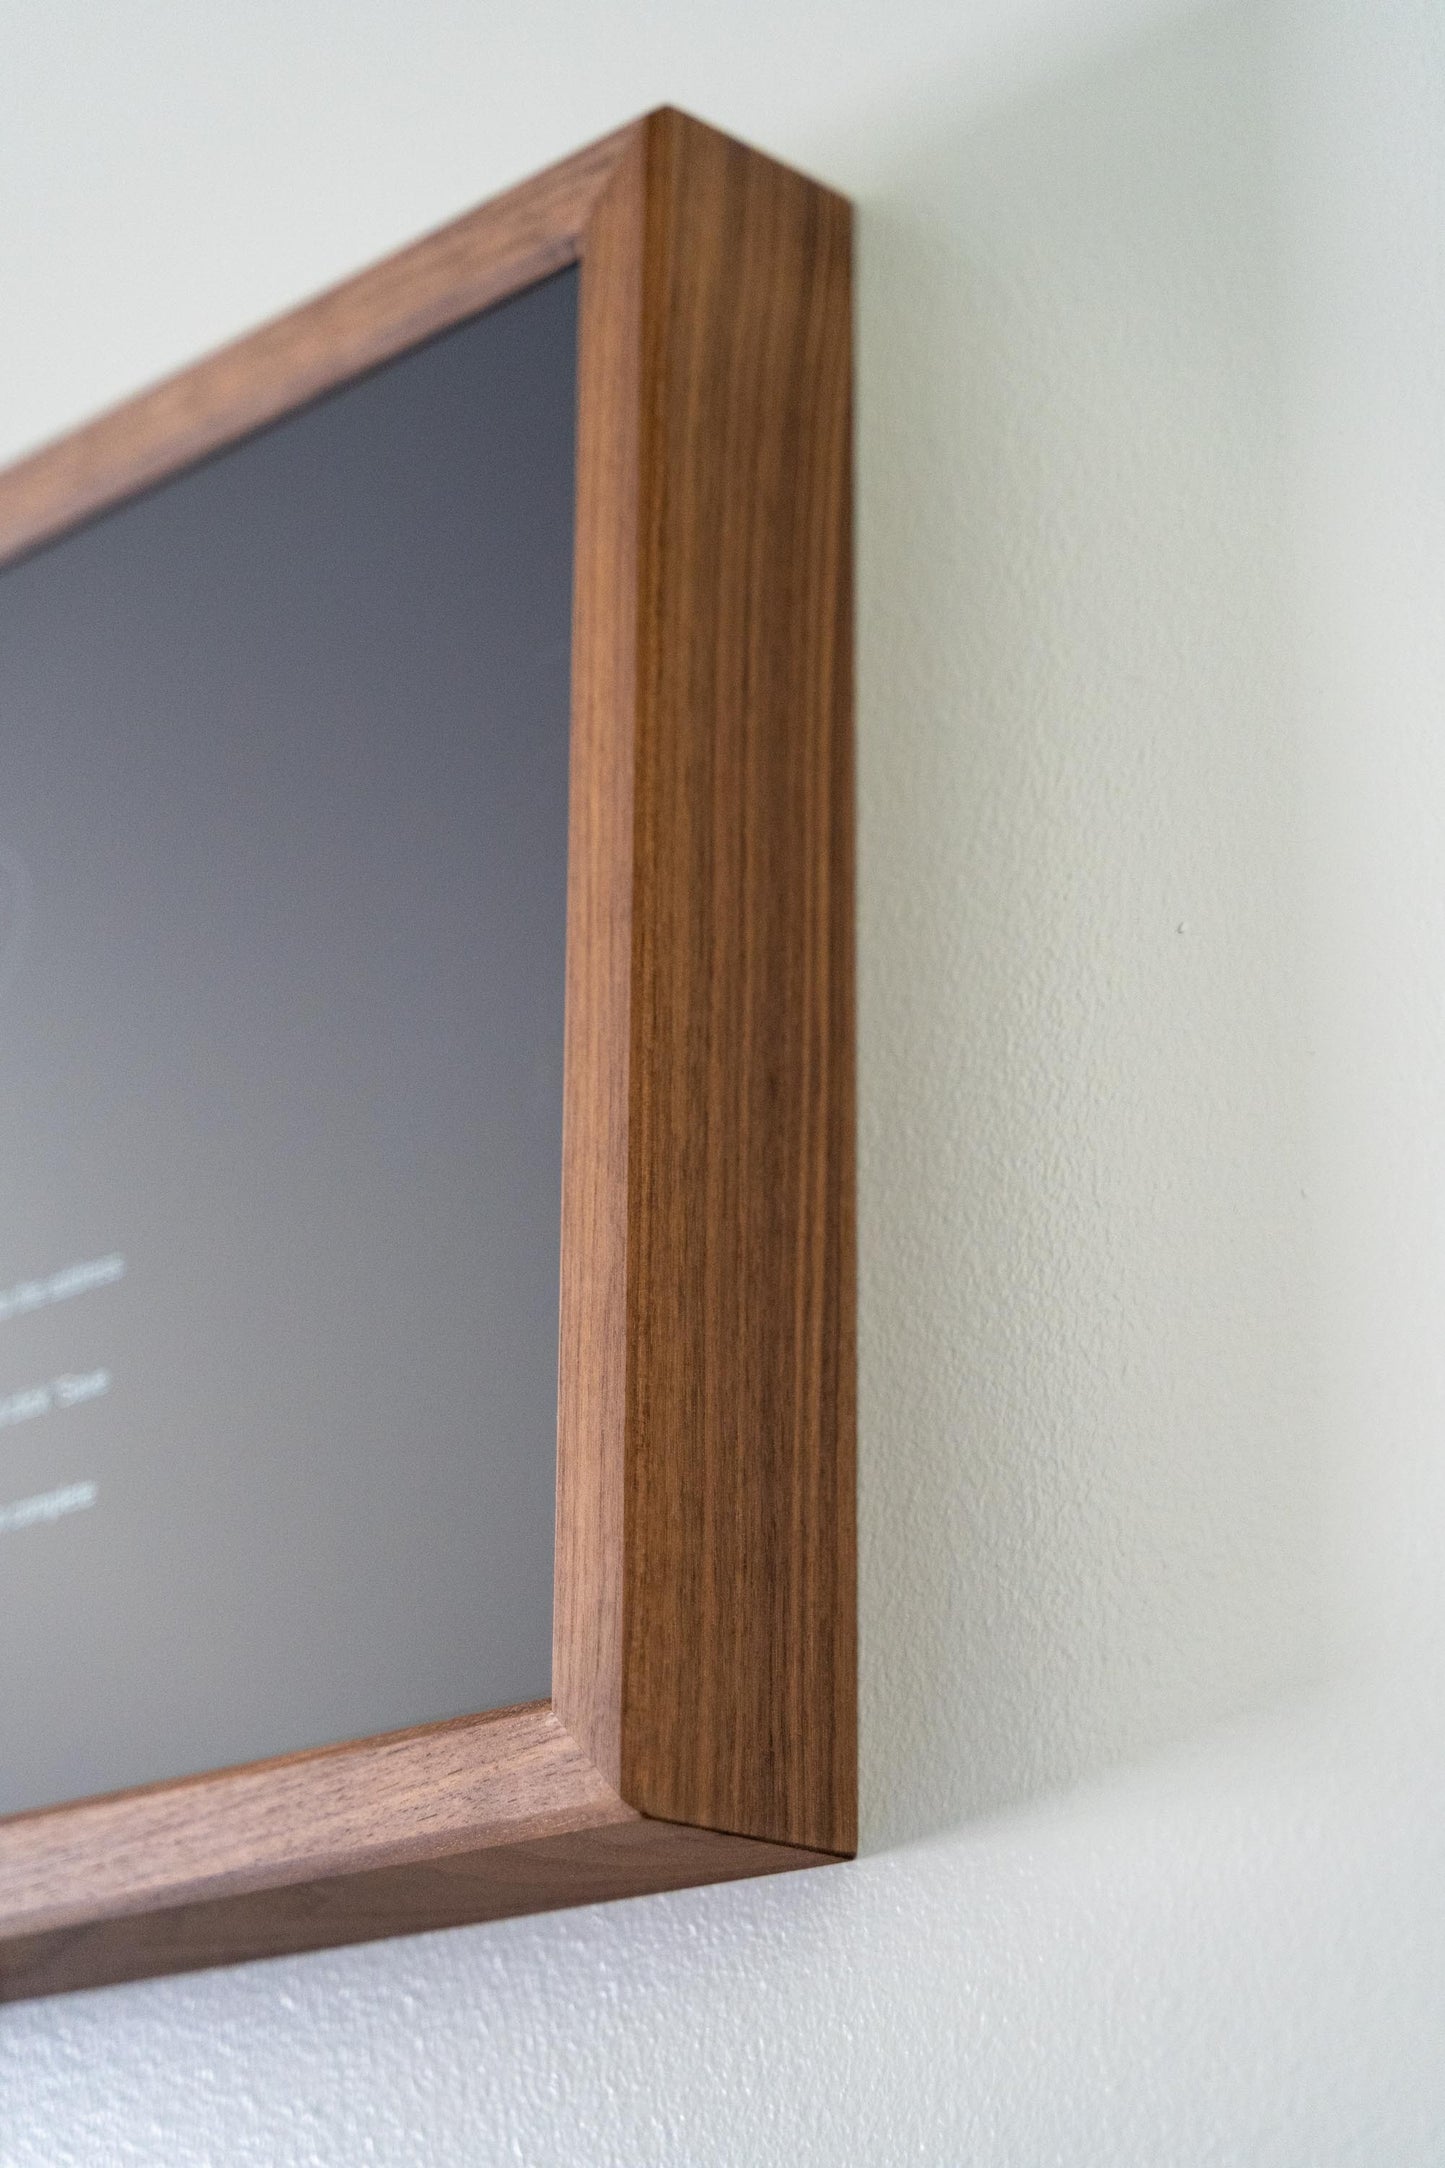 24" Digital Wall Display - Smart Screen - Wifi Calendar - Raspberry Pi - Smart Hub - Smart Home